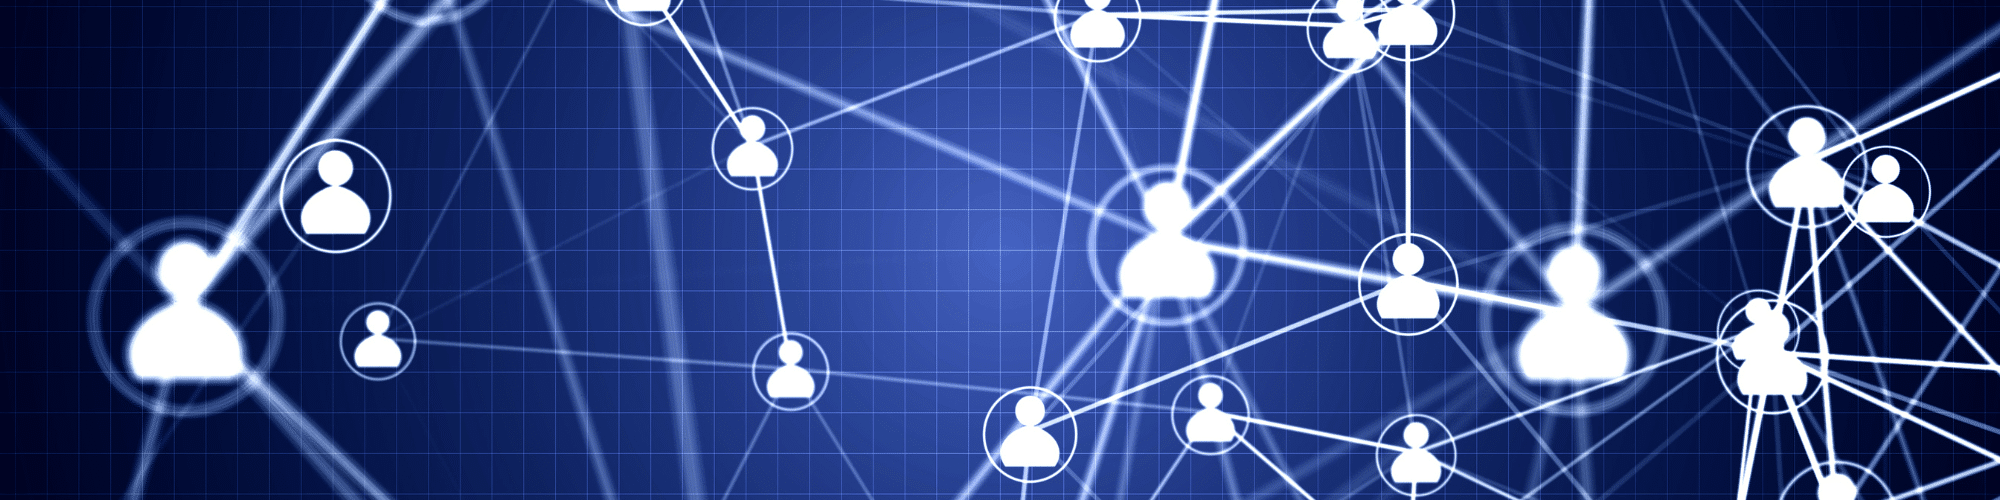 Social Network Analysis Key Terms